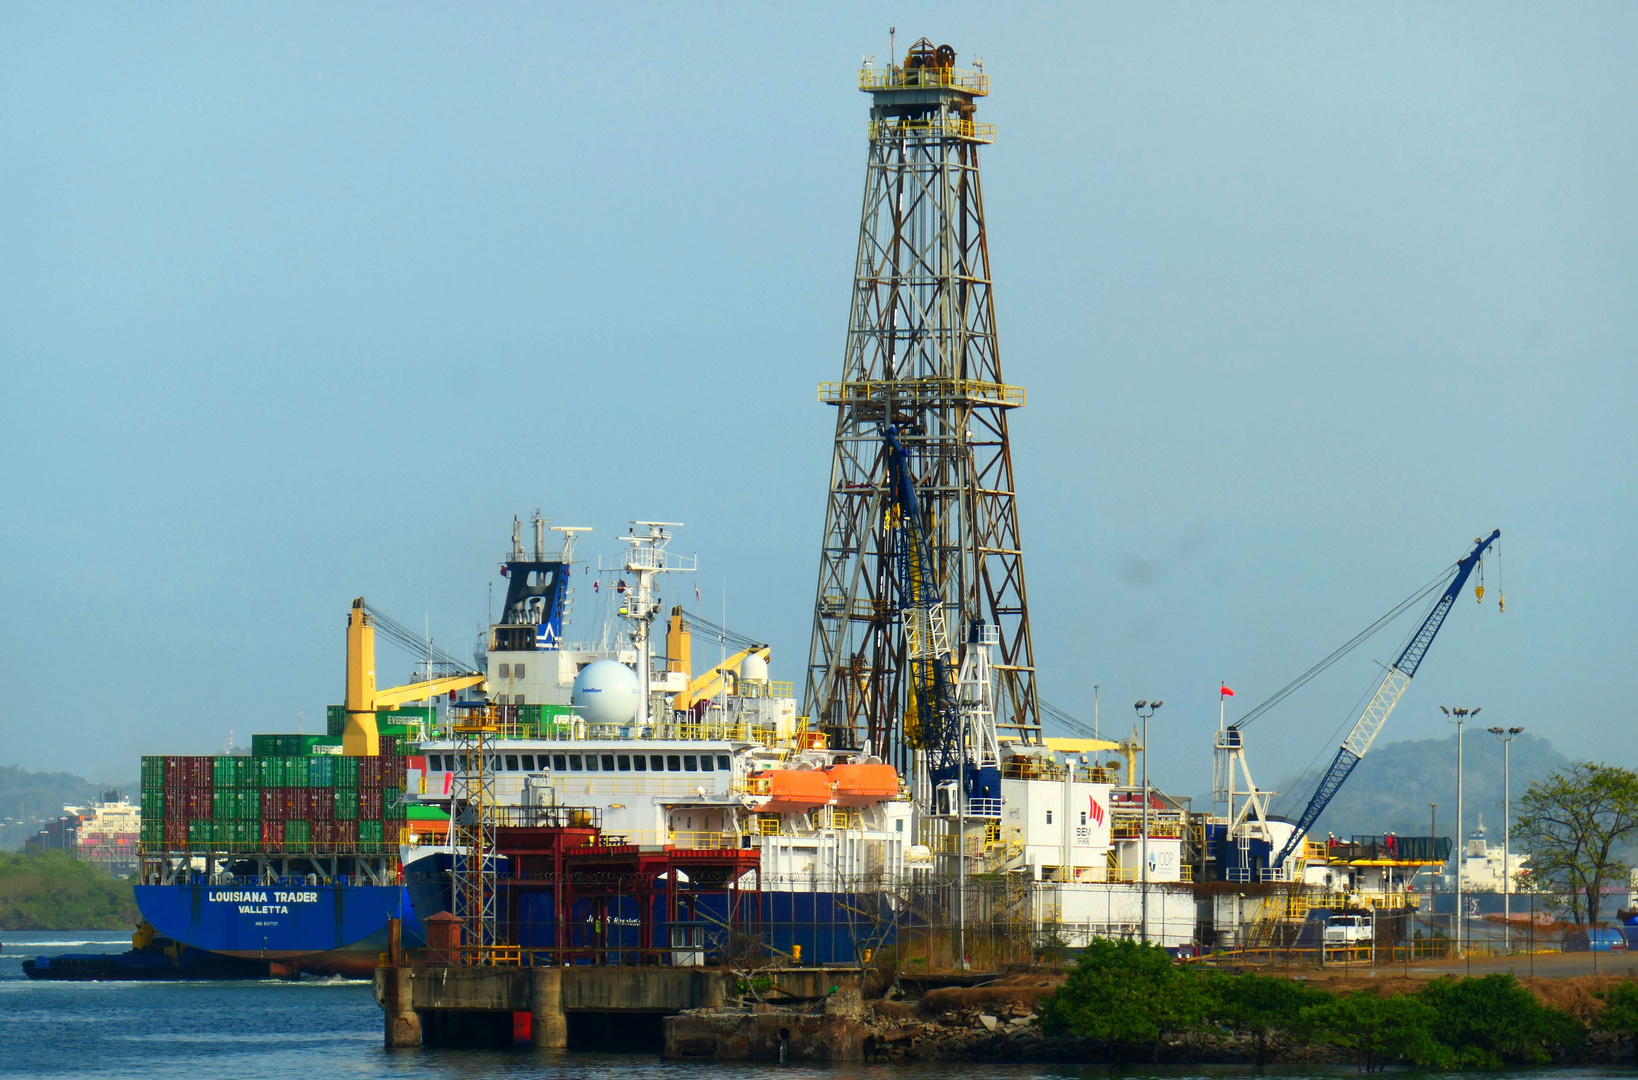 Panama-Kanal Ölbohrer